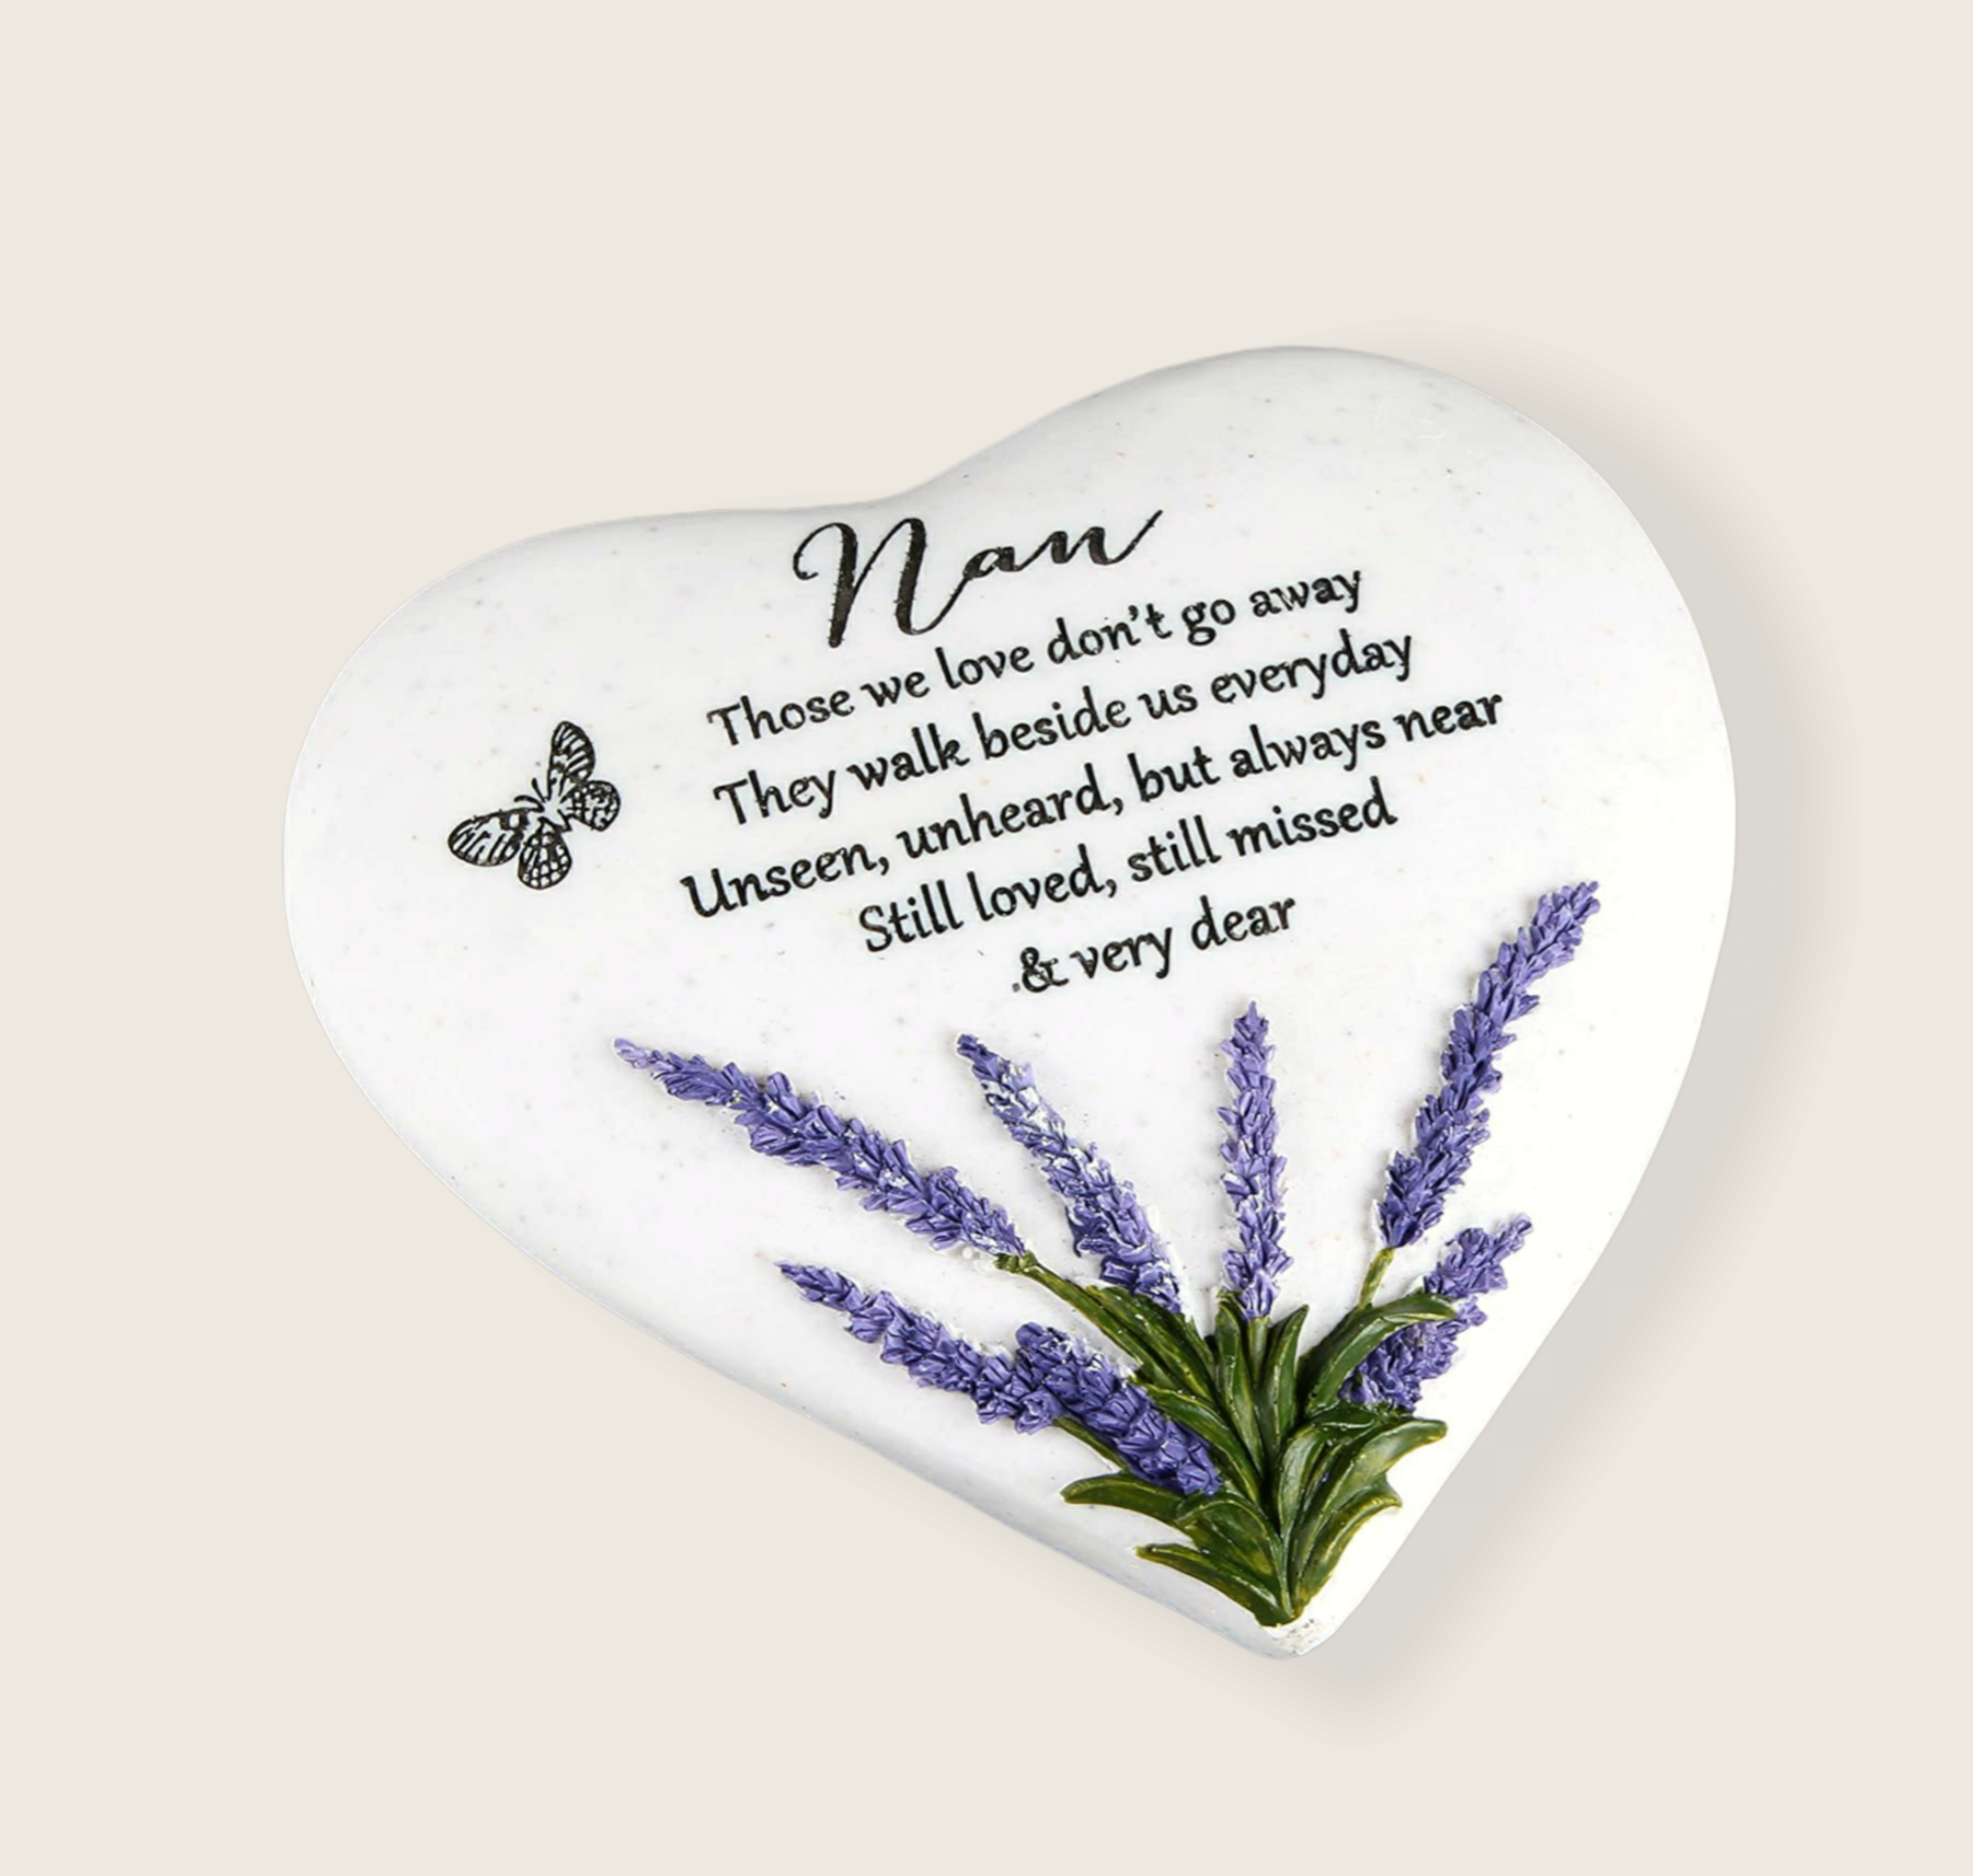 My Nan – Heart Shape Outdoor Memorial Plaque with Lavender design